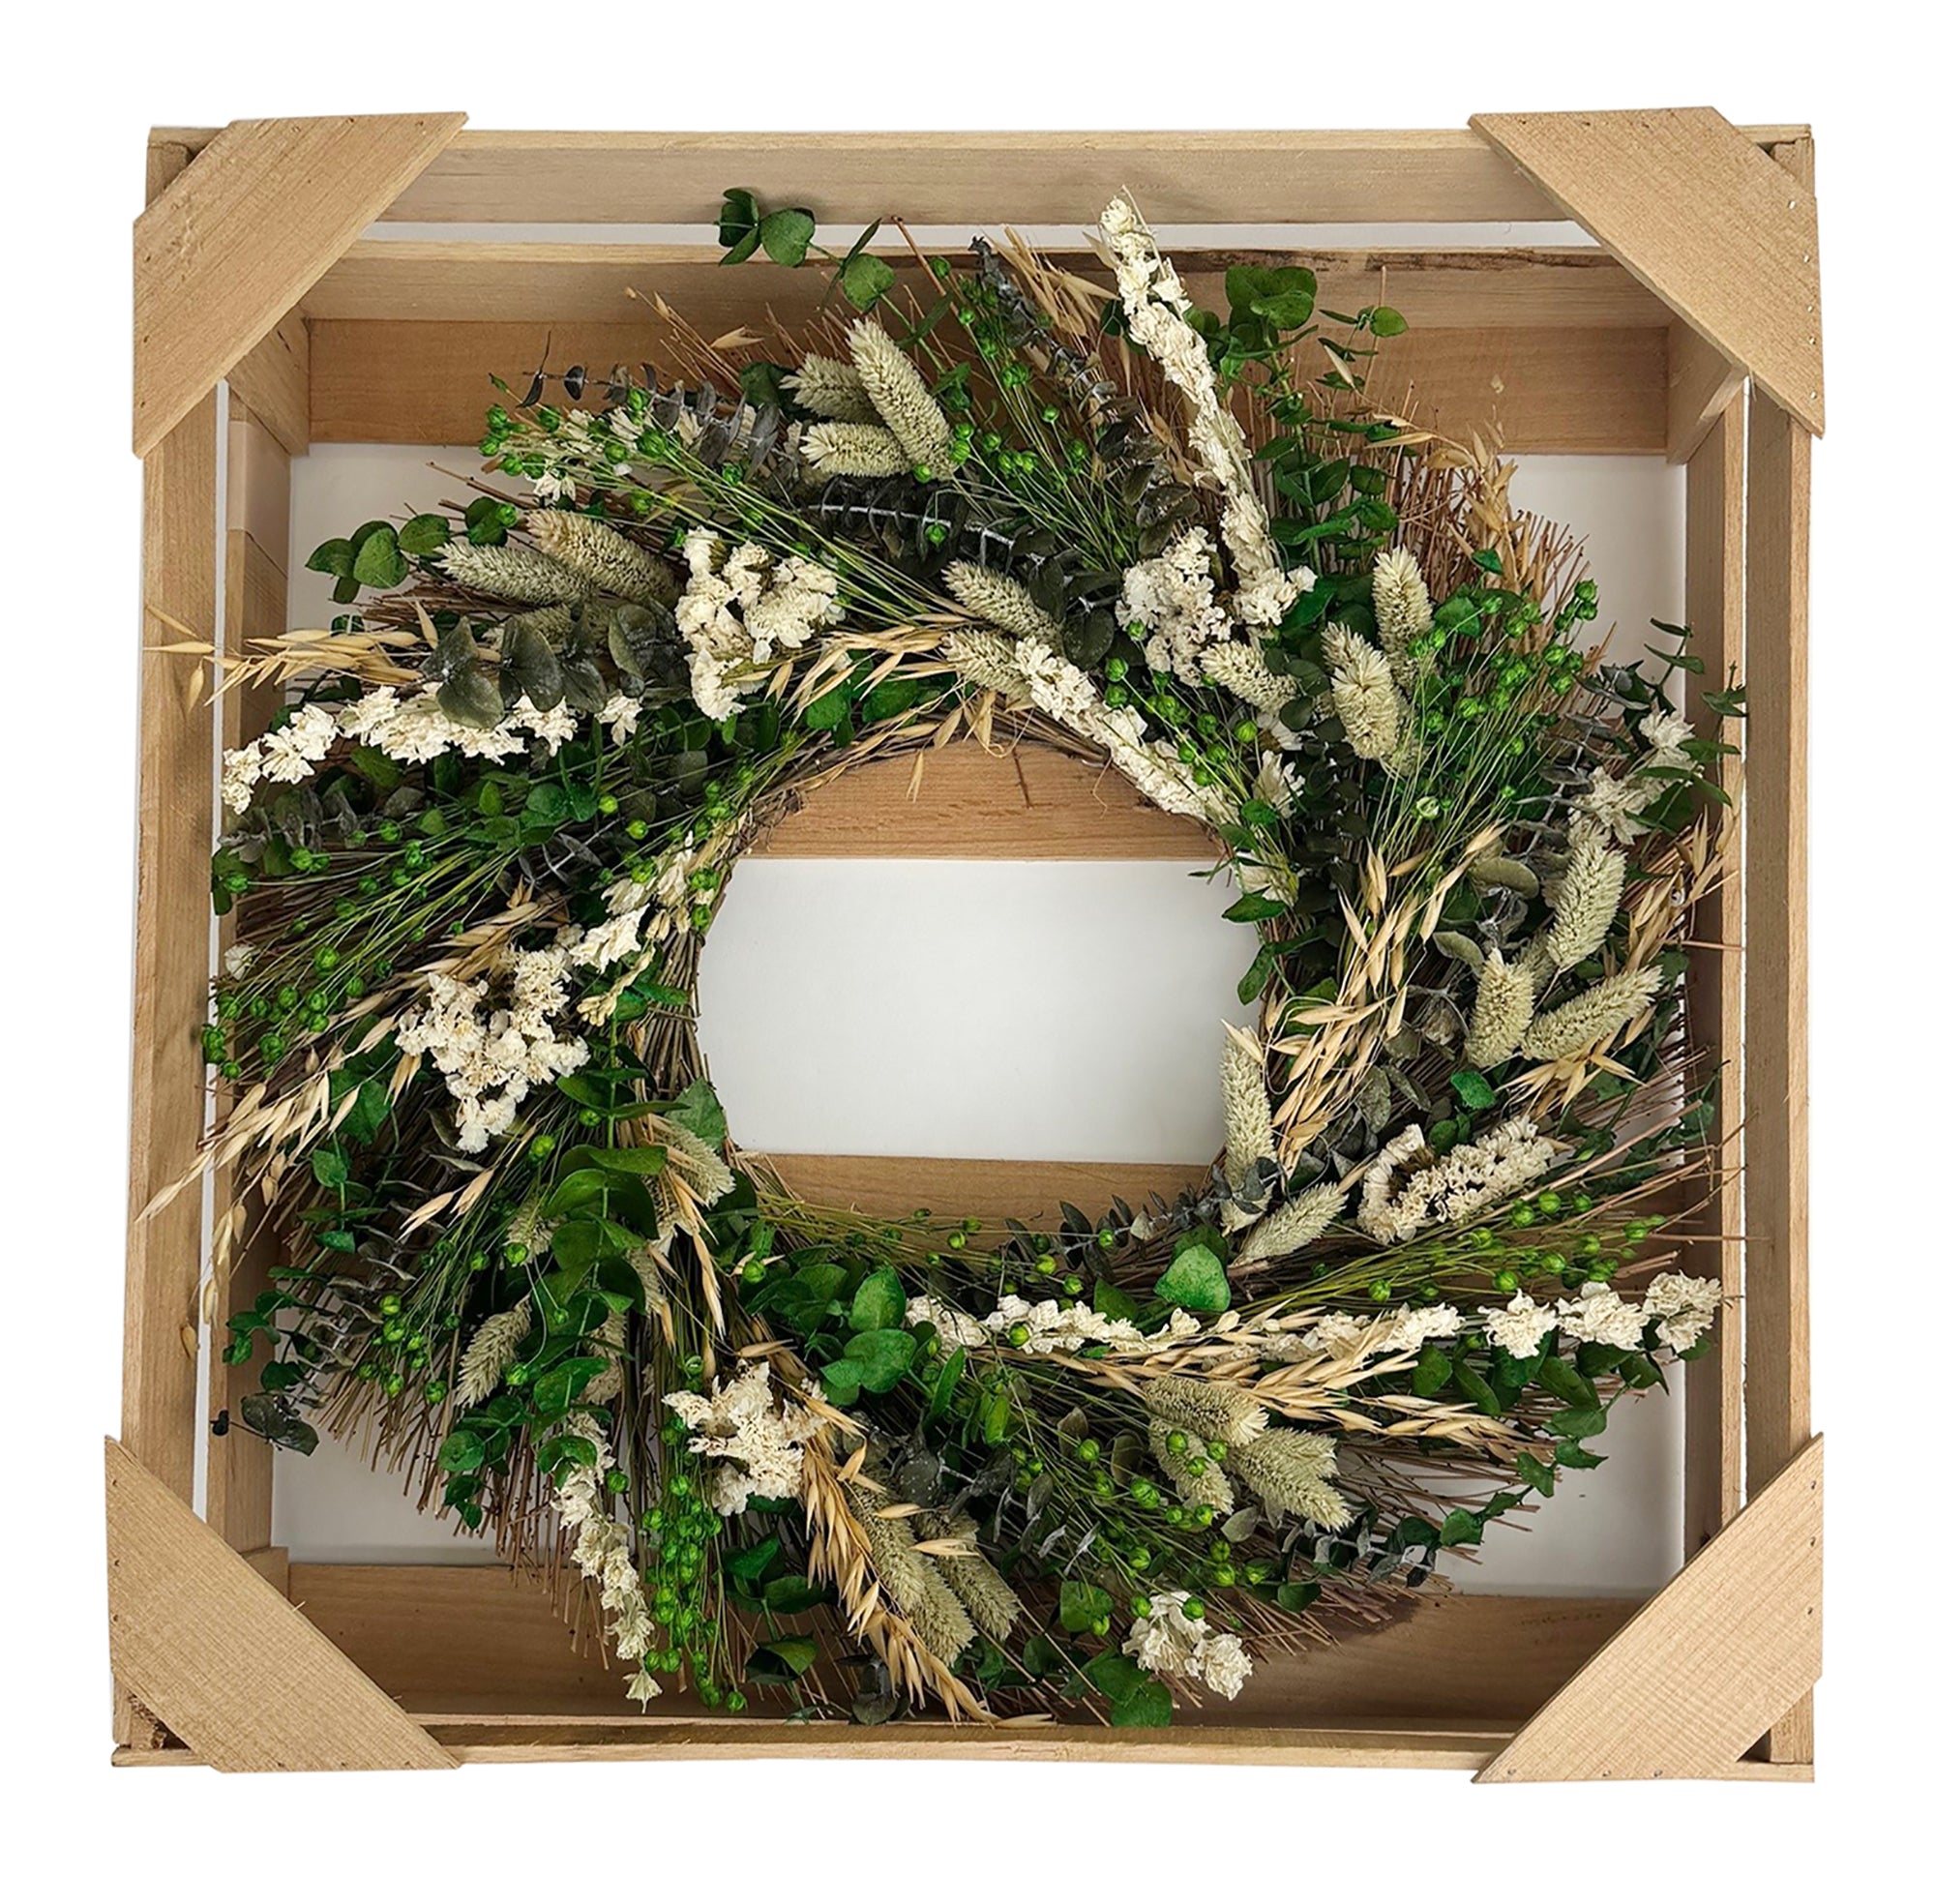 Savannah Wreath in storage crate